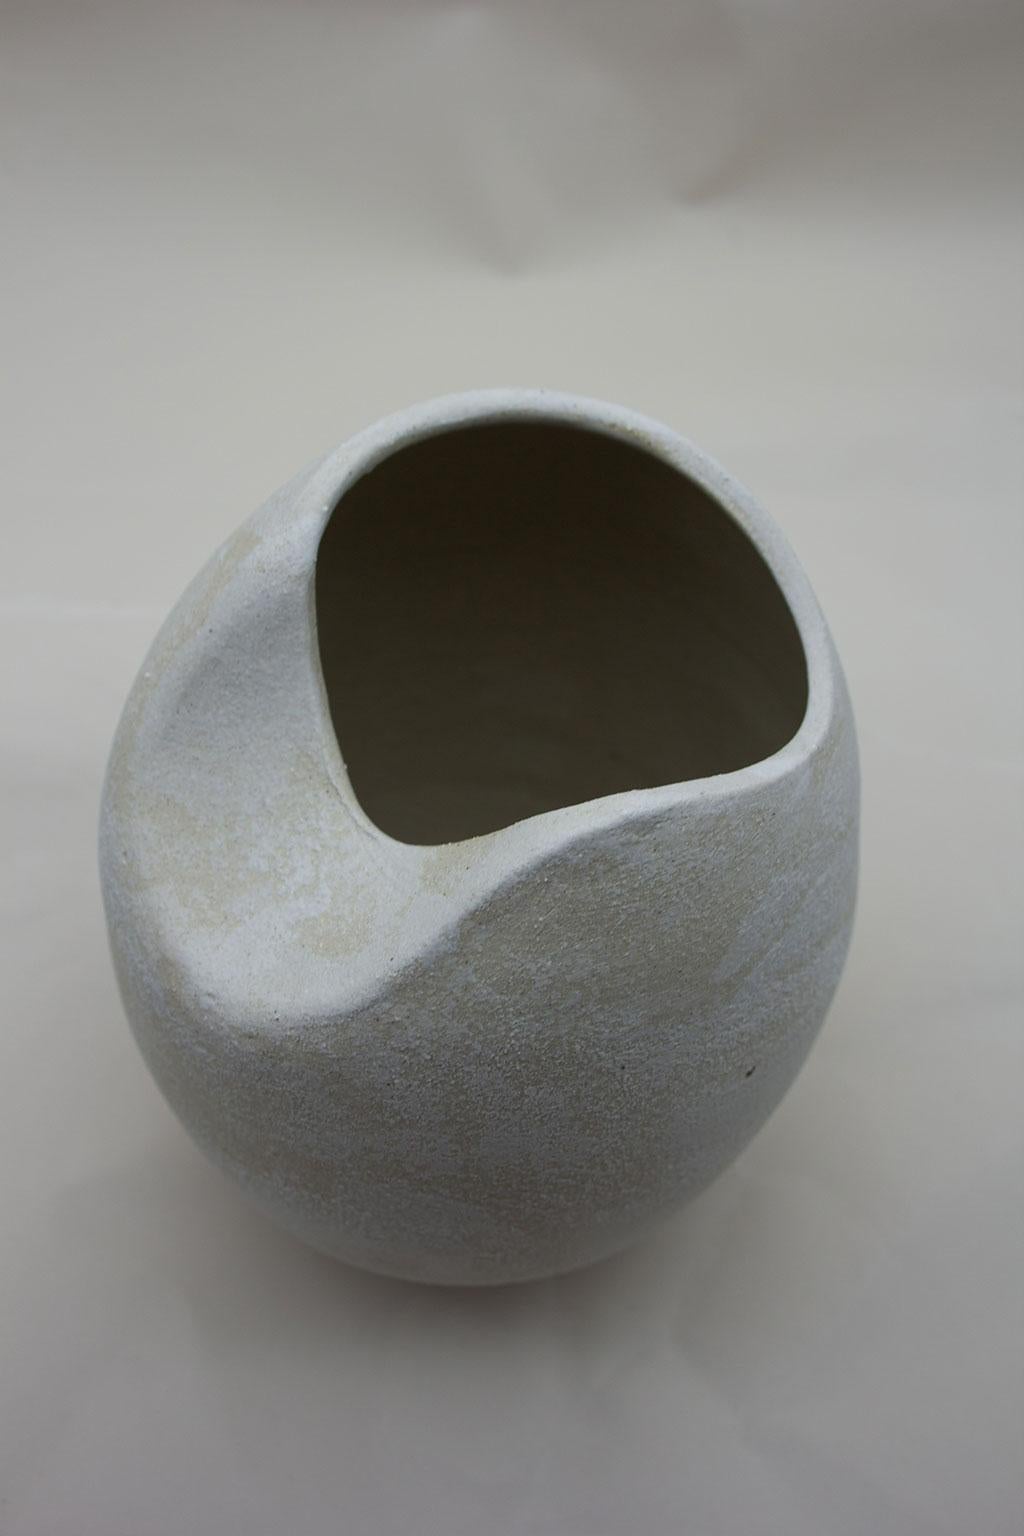 Hand-Crafted Sliced Sphere with Half Sliced Form Ceramic Sculpture in Warm Beige Stoneware